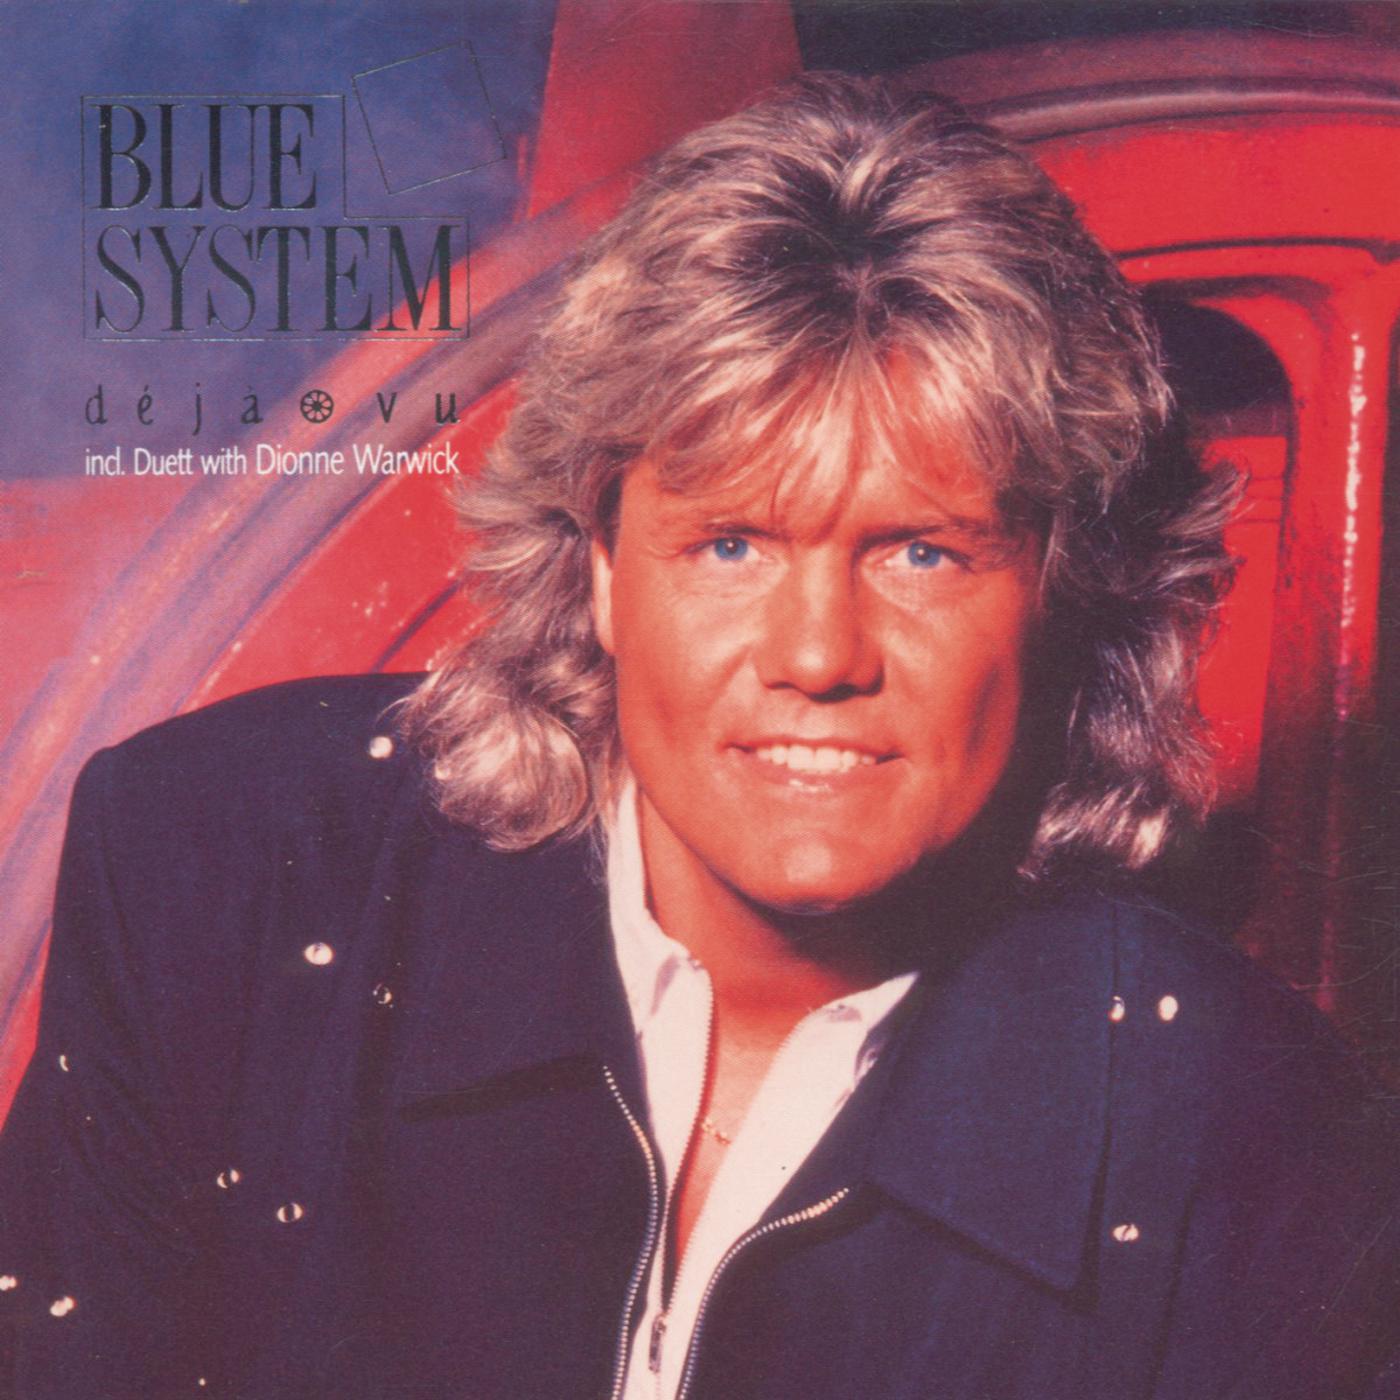 Blues system org. Группа Blue System. Дитер болен. Blue System 1994. Blue System deja vu 1991.